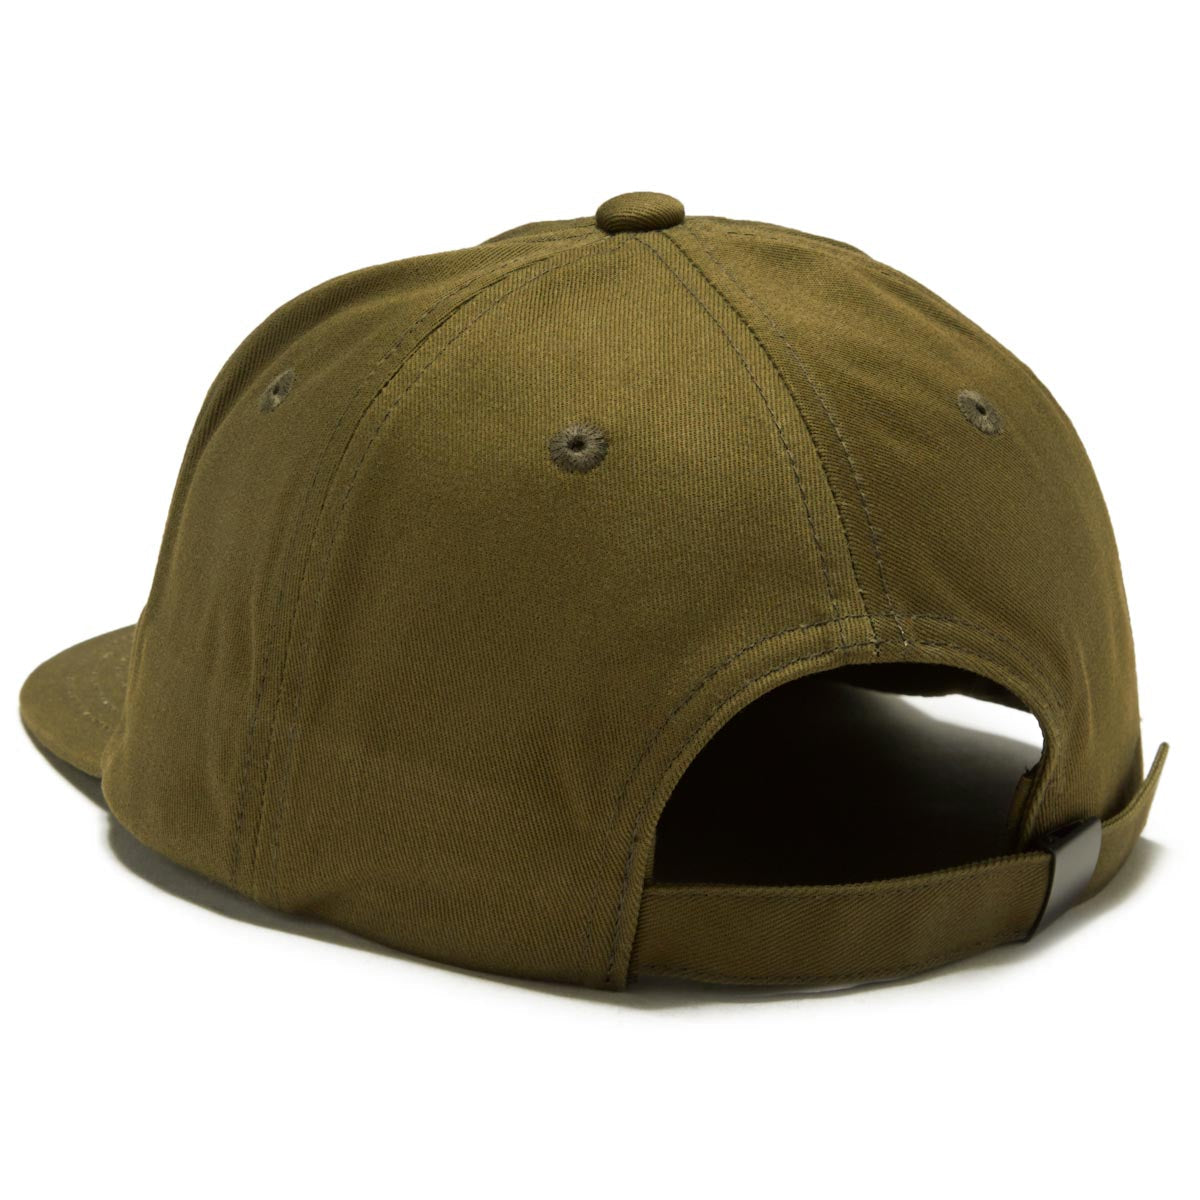 Zero Army Applique Hat - Olive image 2